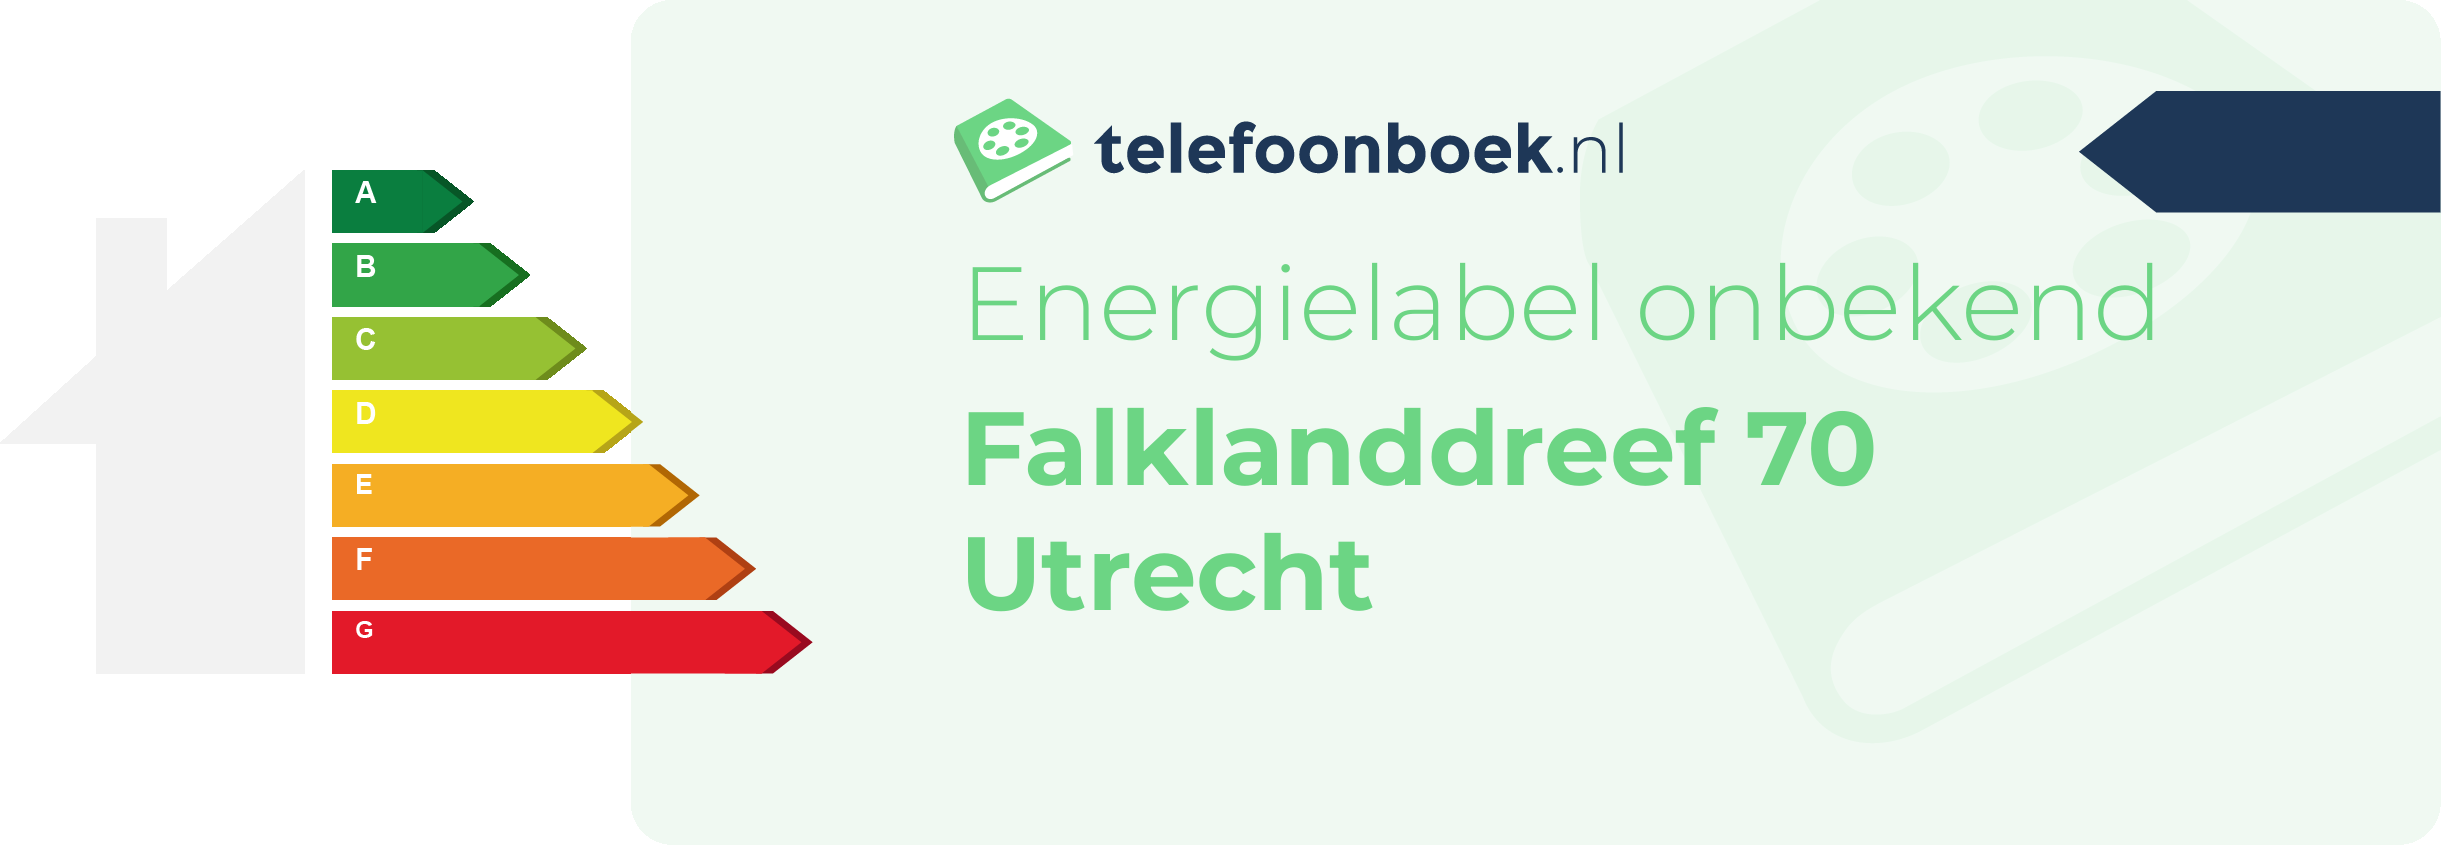 Energielabel Falklanddreef 70 Utrecht